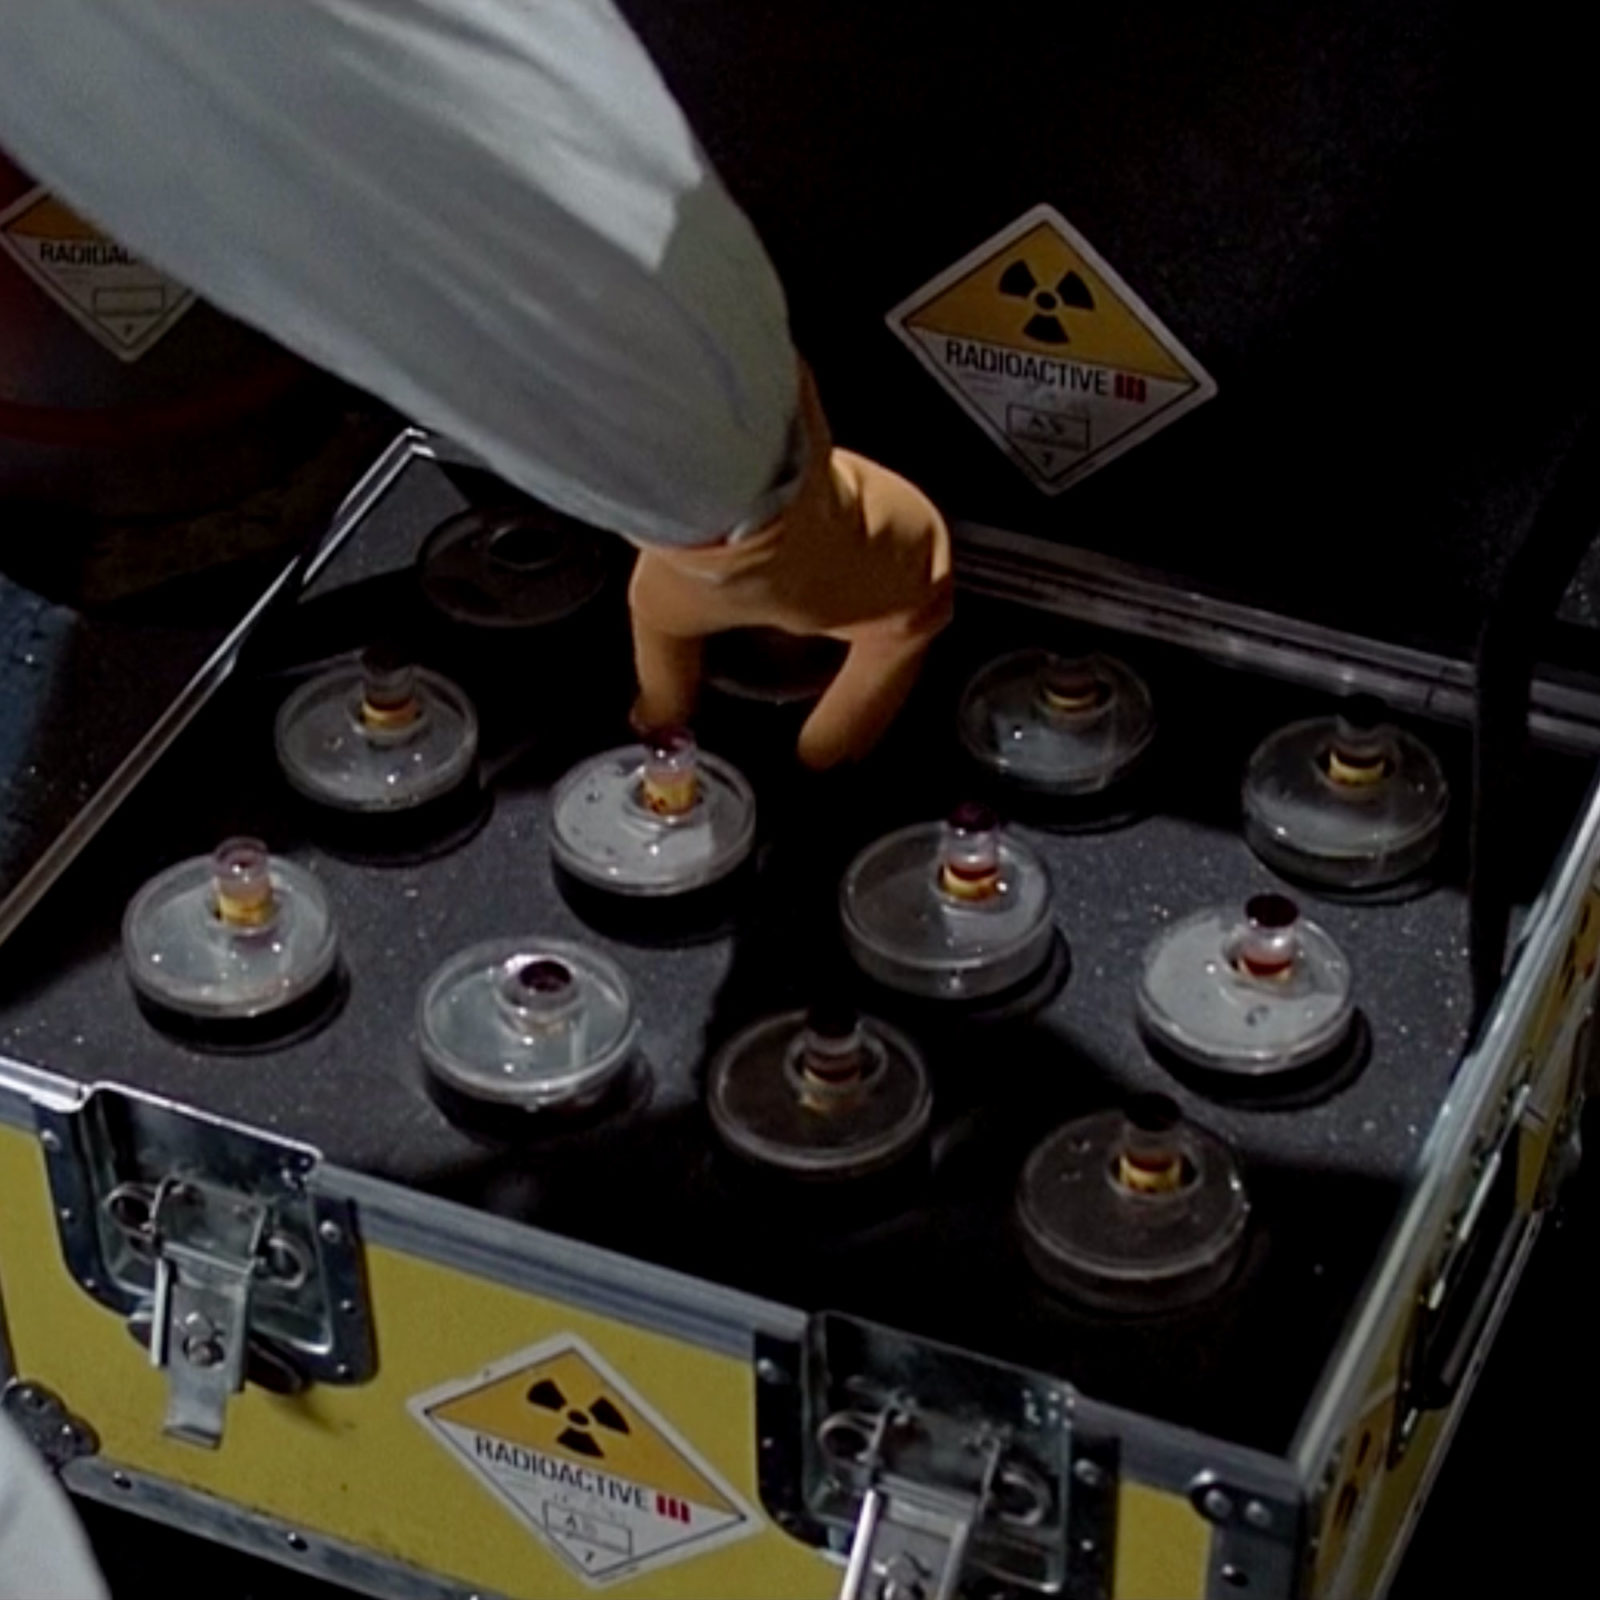 Original DeLorean plutonium case from Back to the Future